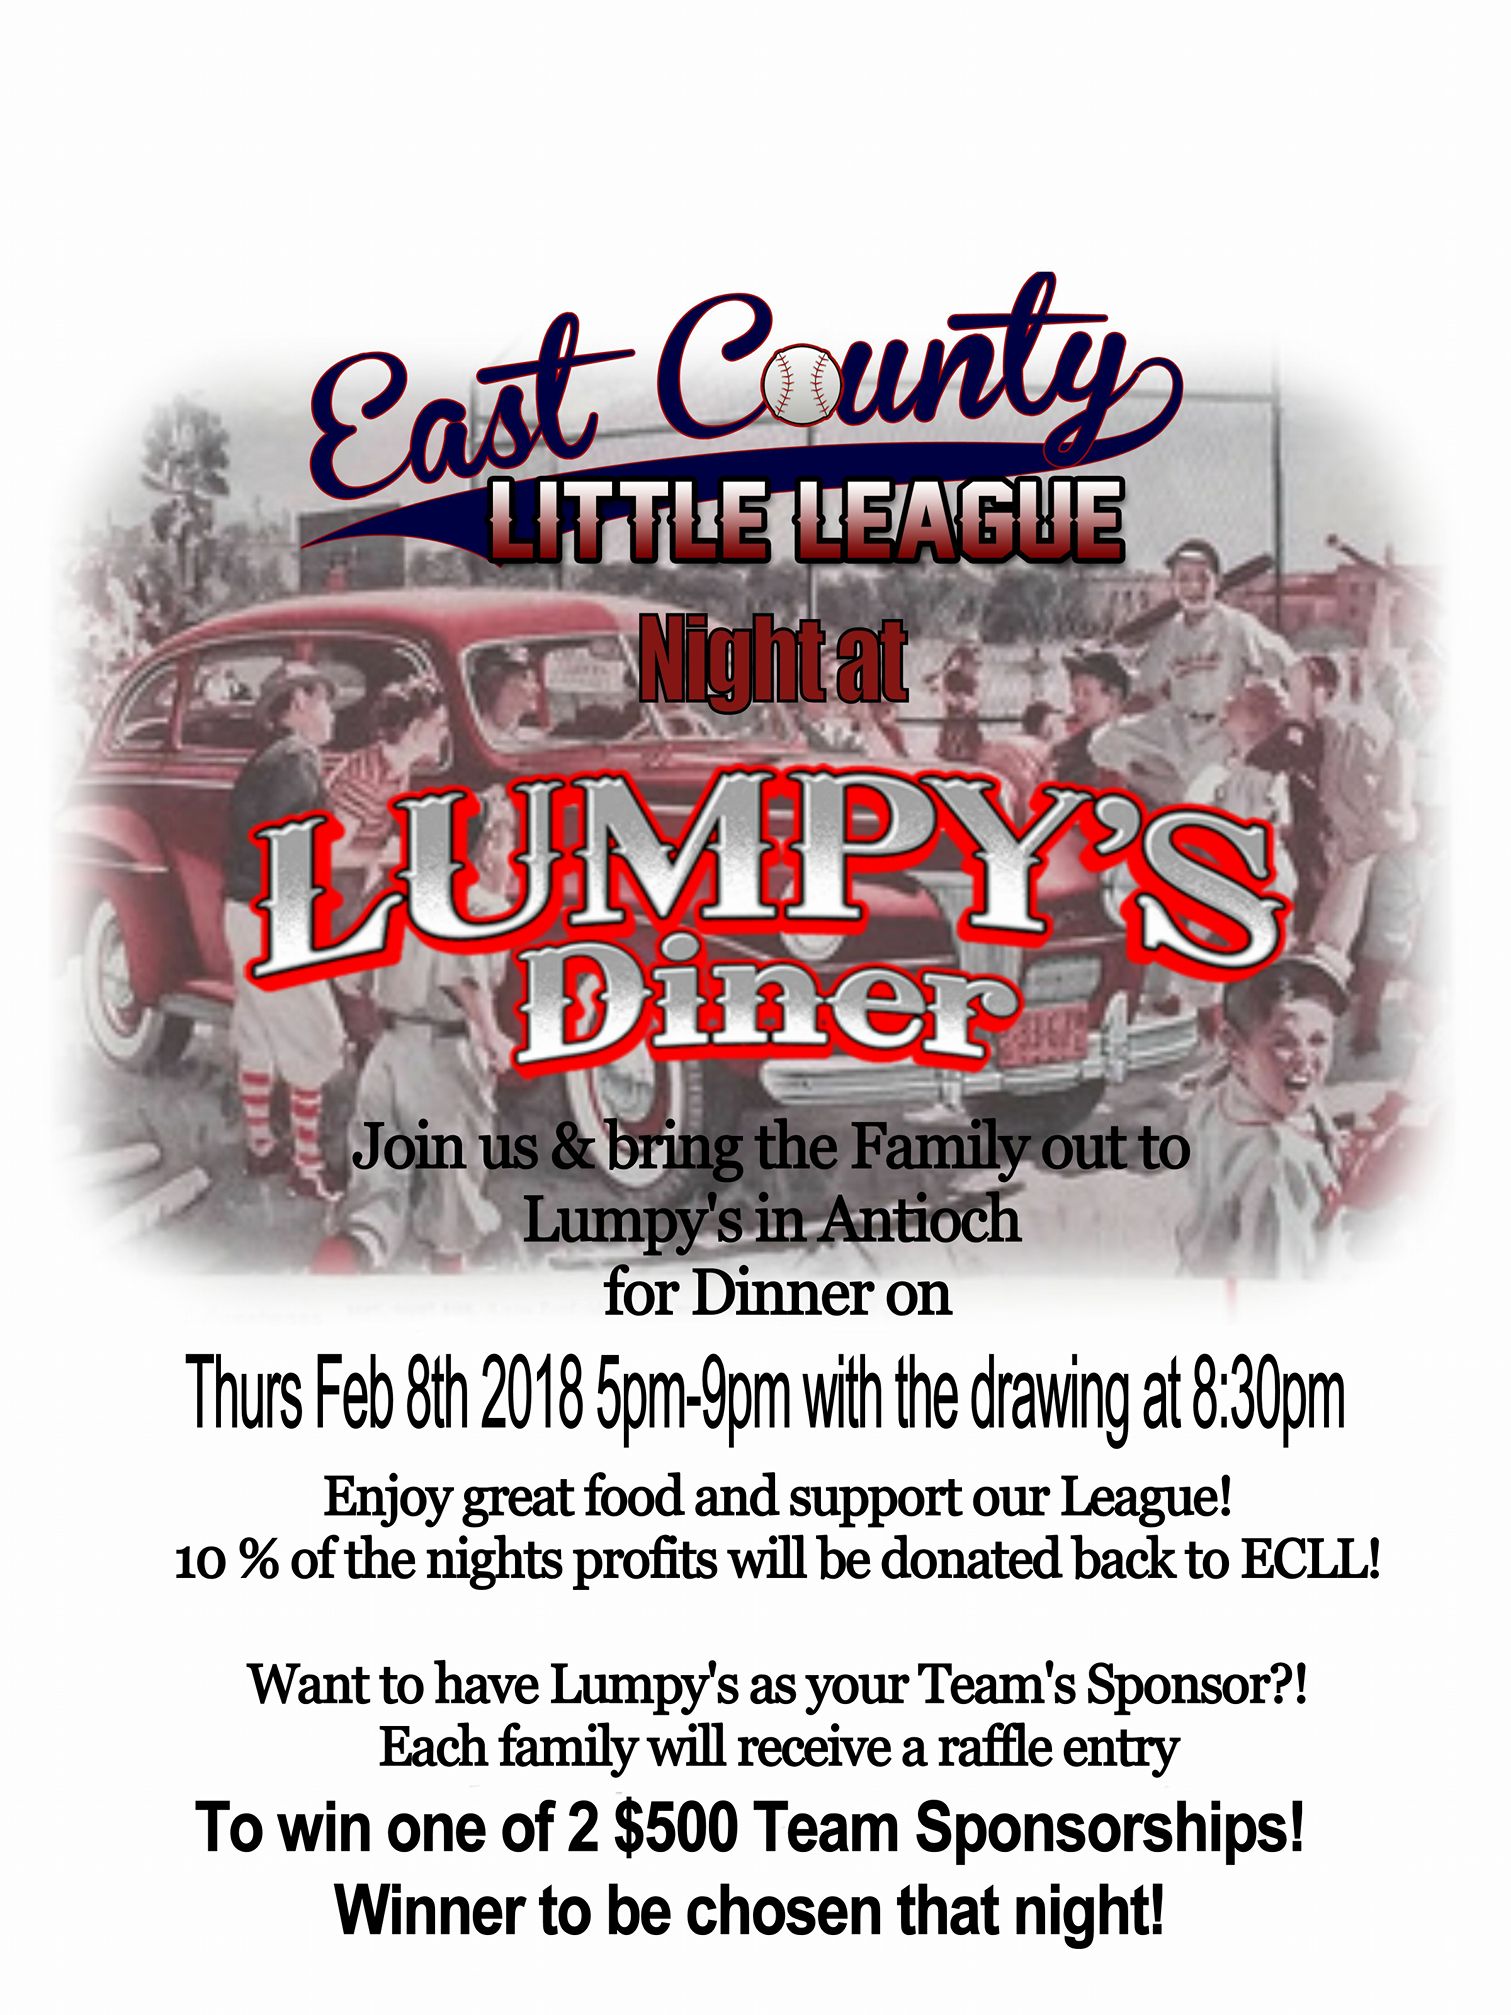 East County Little League Fundraiser